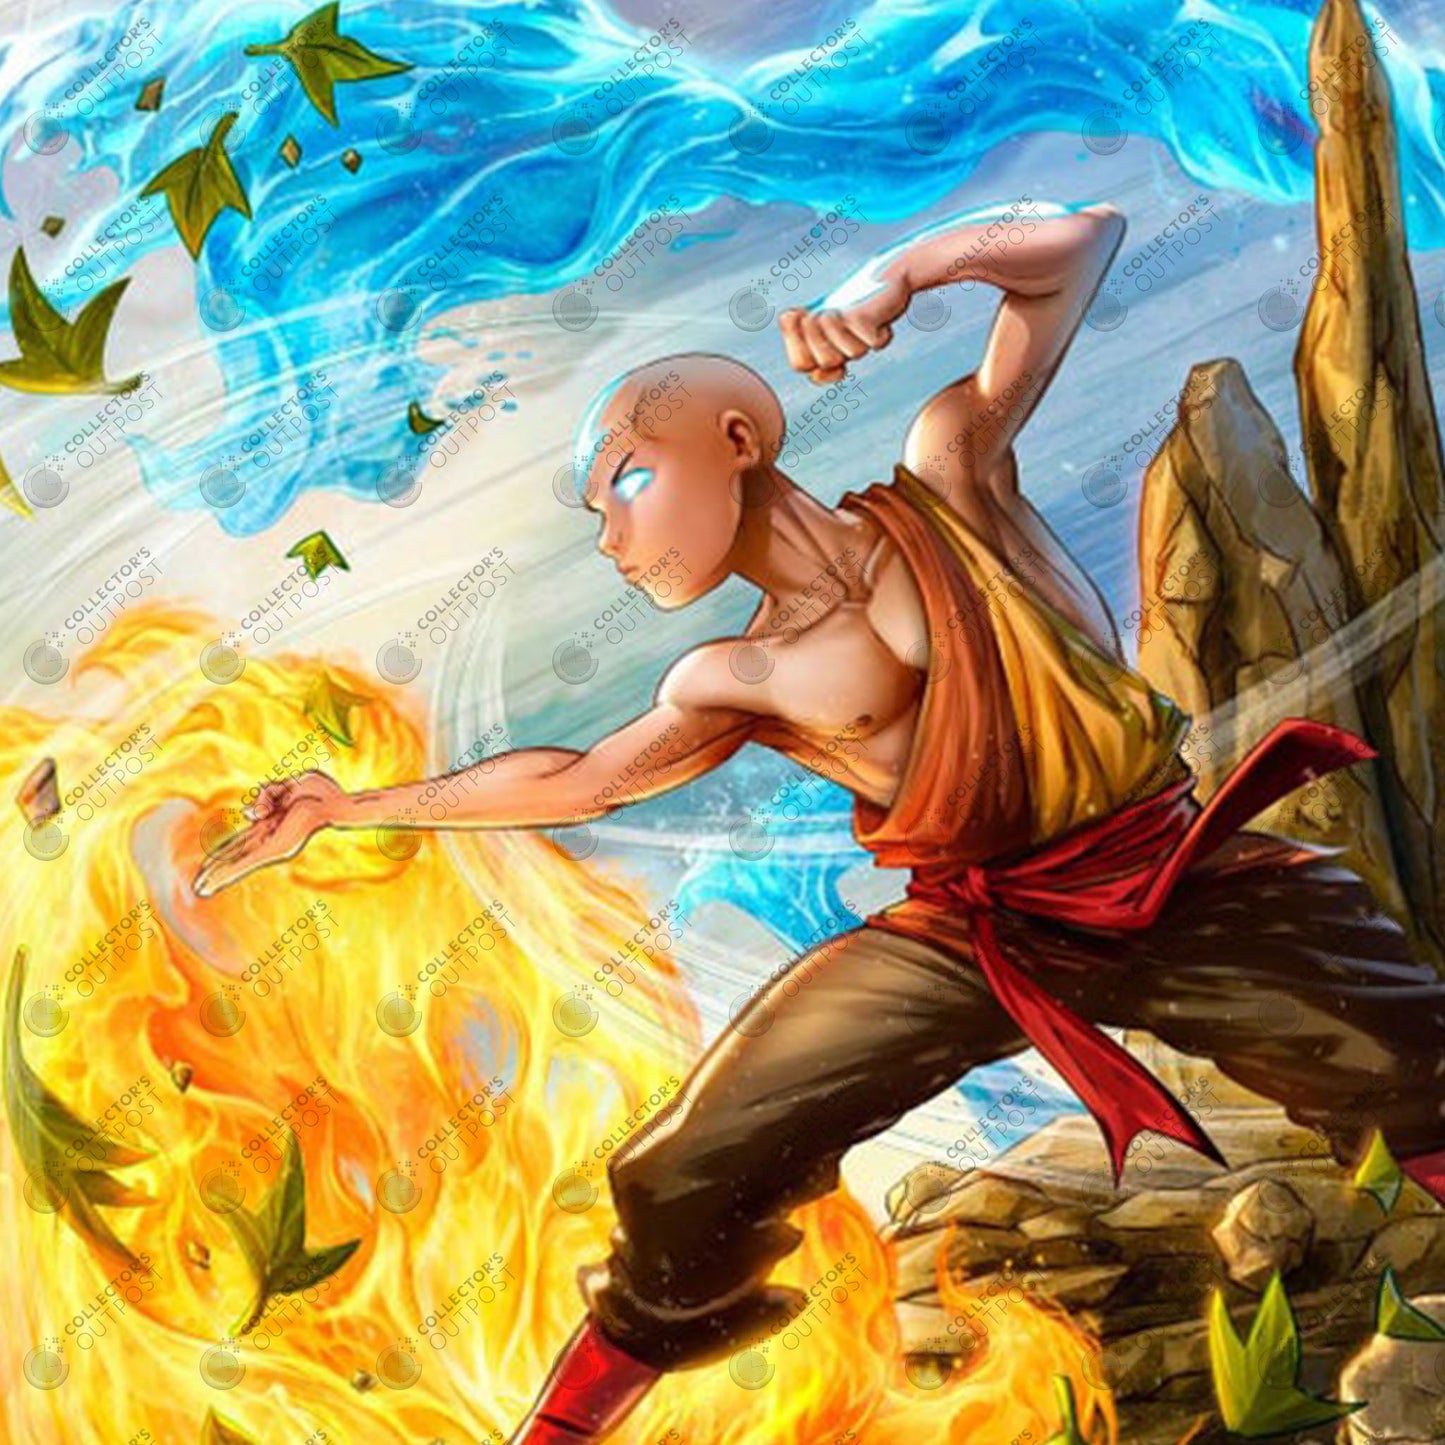  Aang Master of Elements (Avatar: The Last Airbender) Premium Art Print